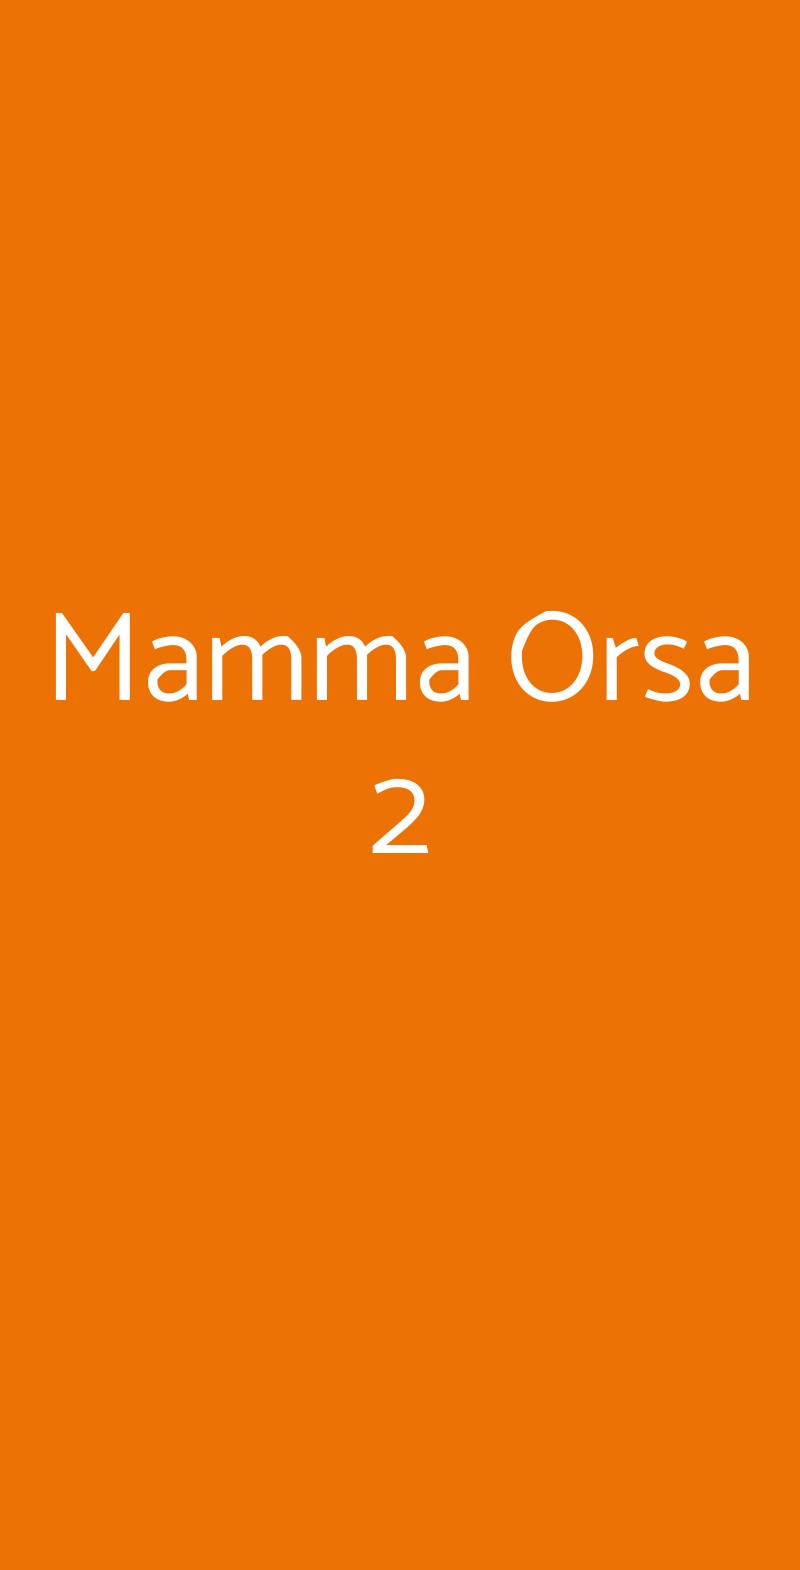 Mamma Orsa 2 Milano menù 1 pagina